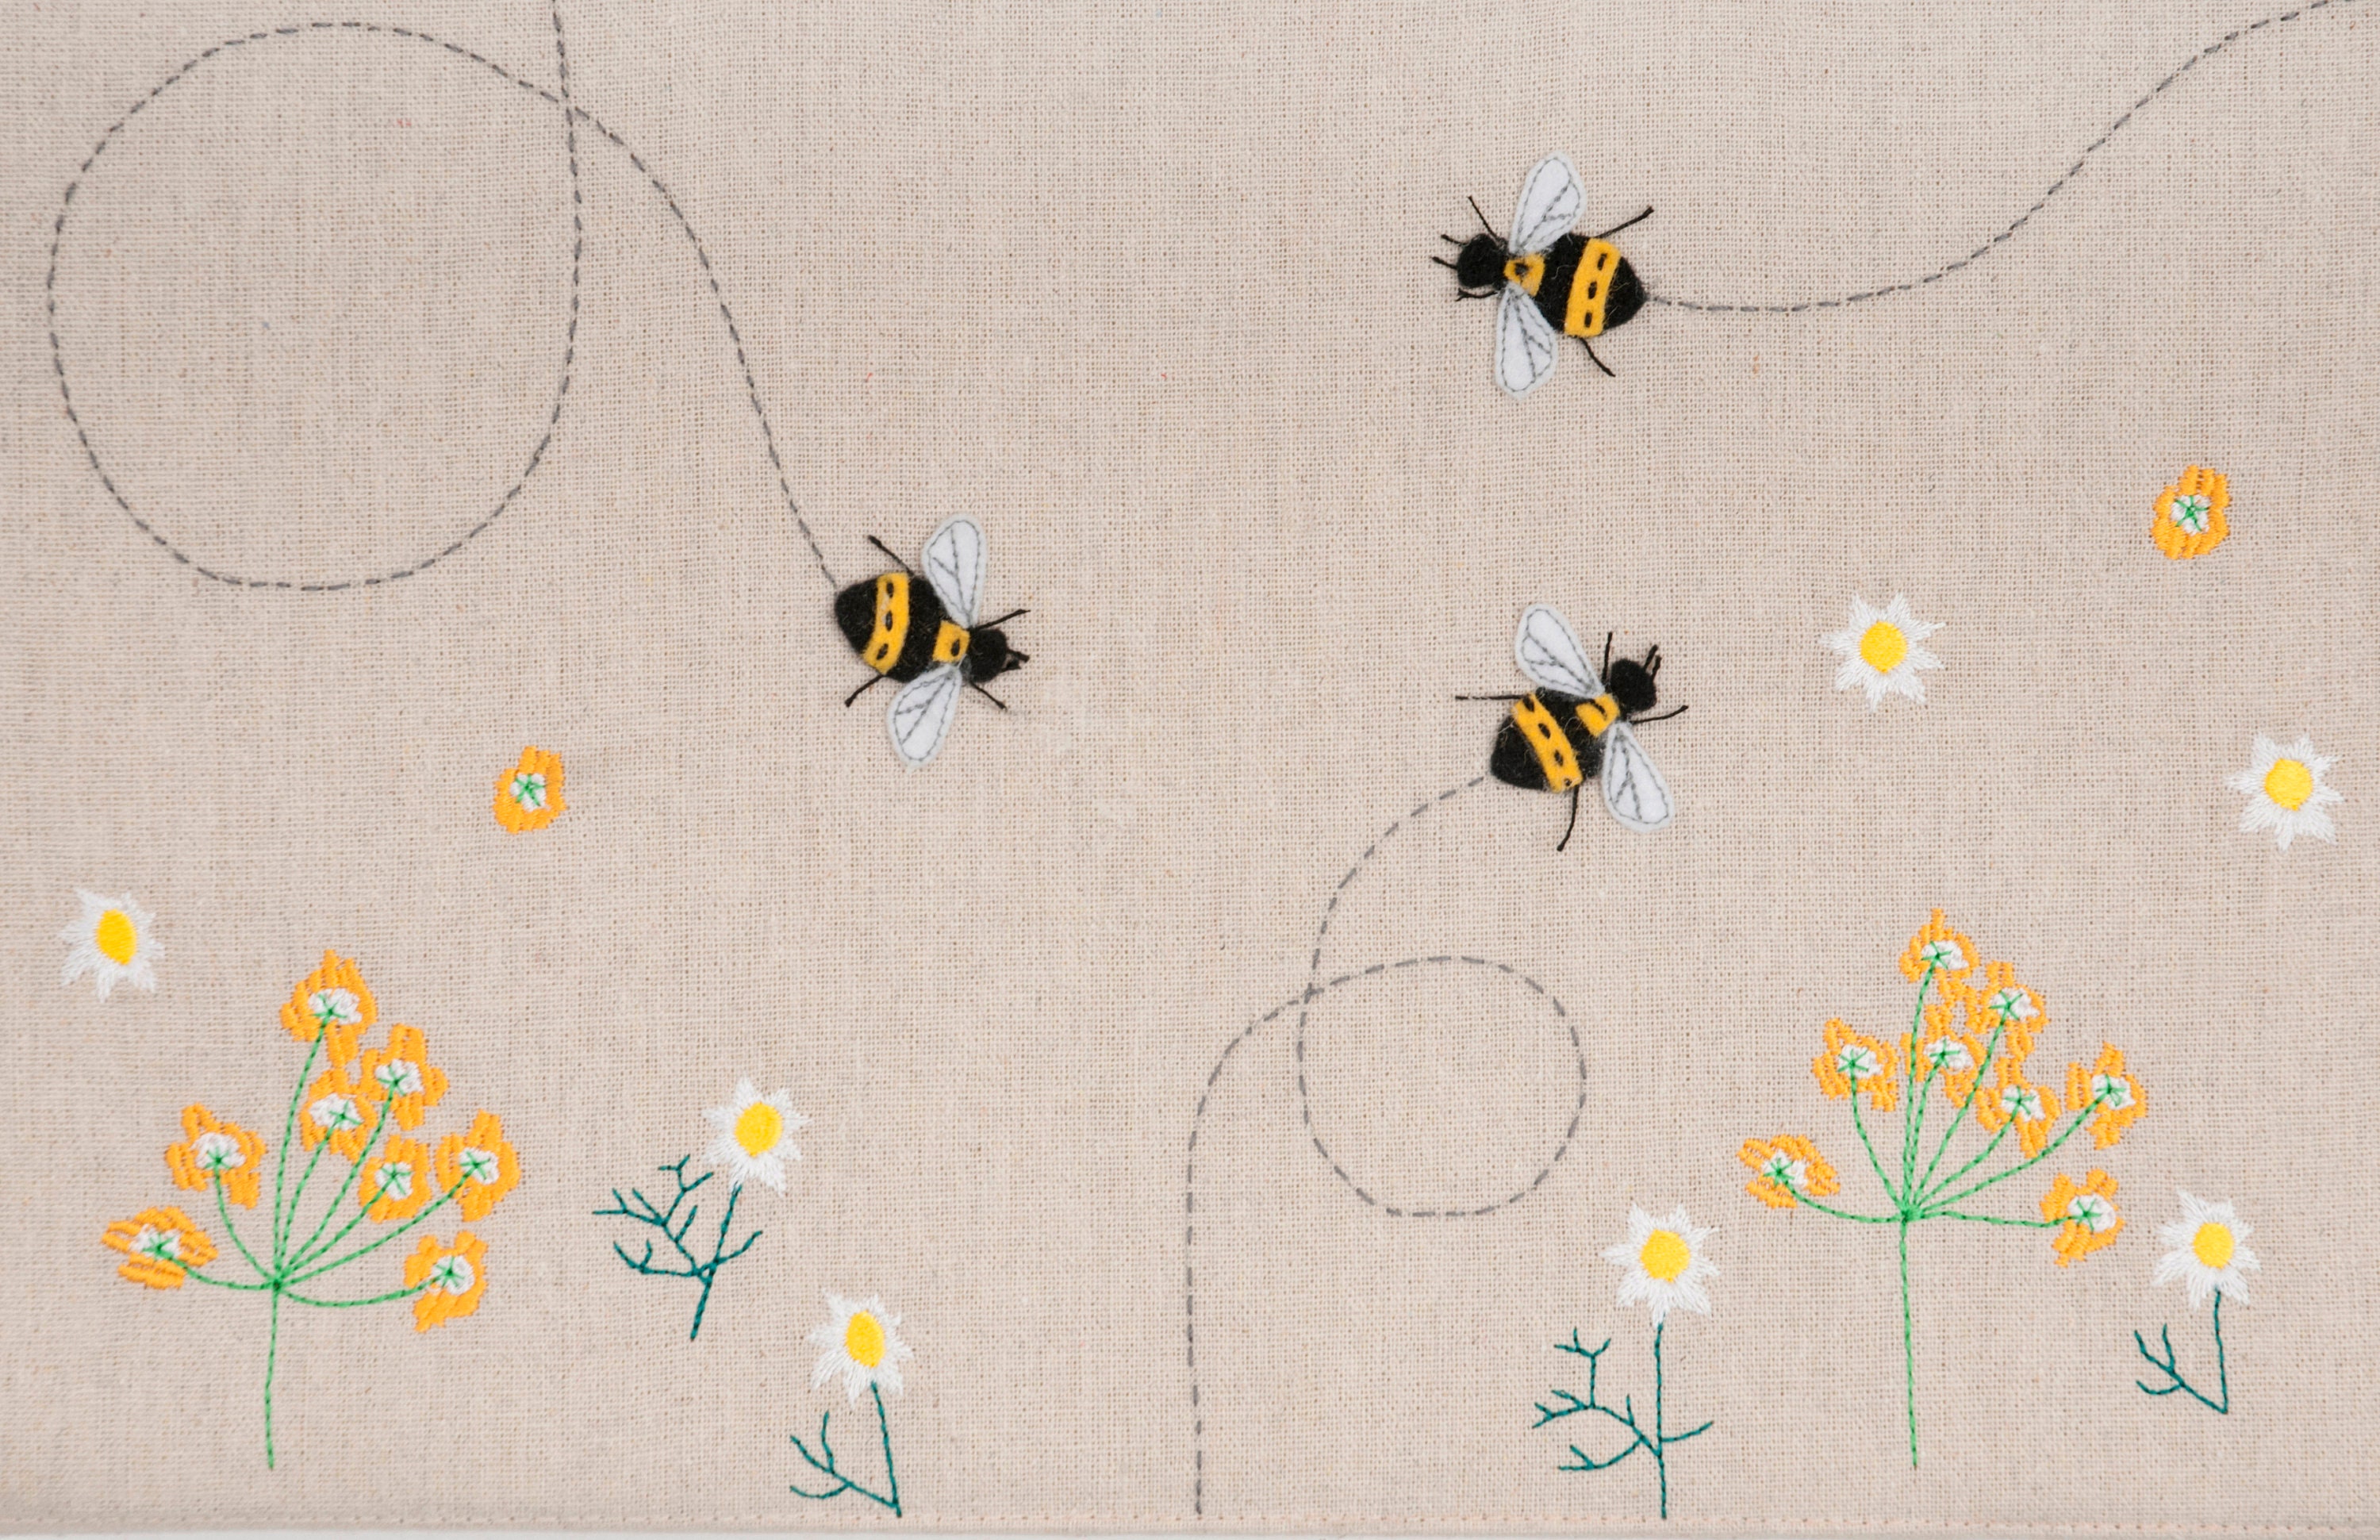 Hobby Gift Sewing Box Wicker Basket: Bee – ATALONDON